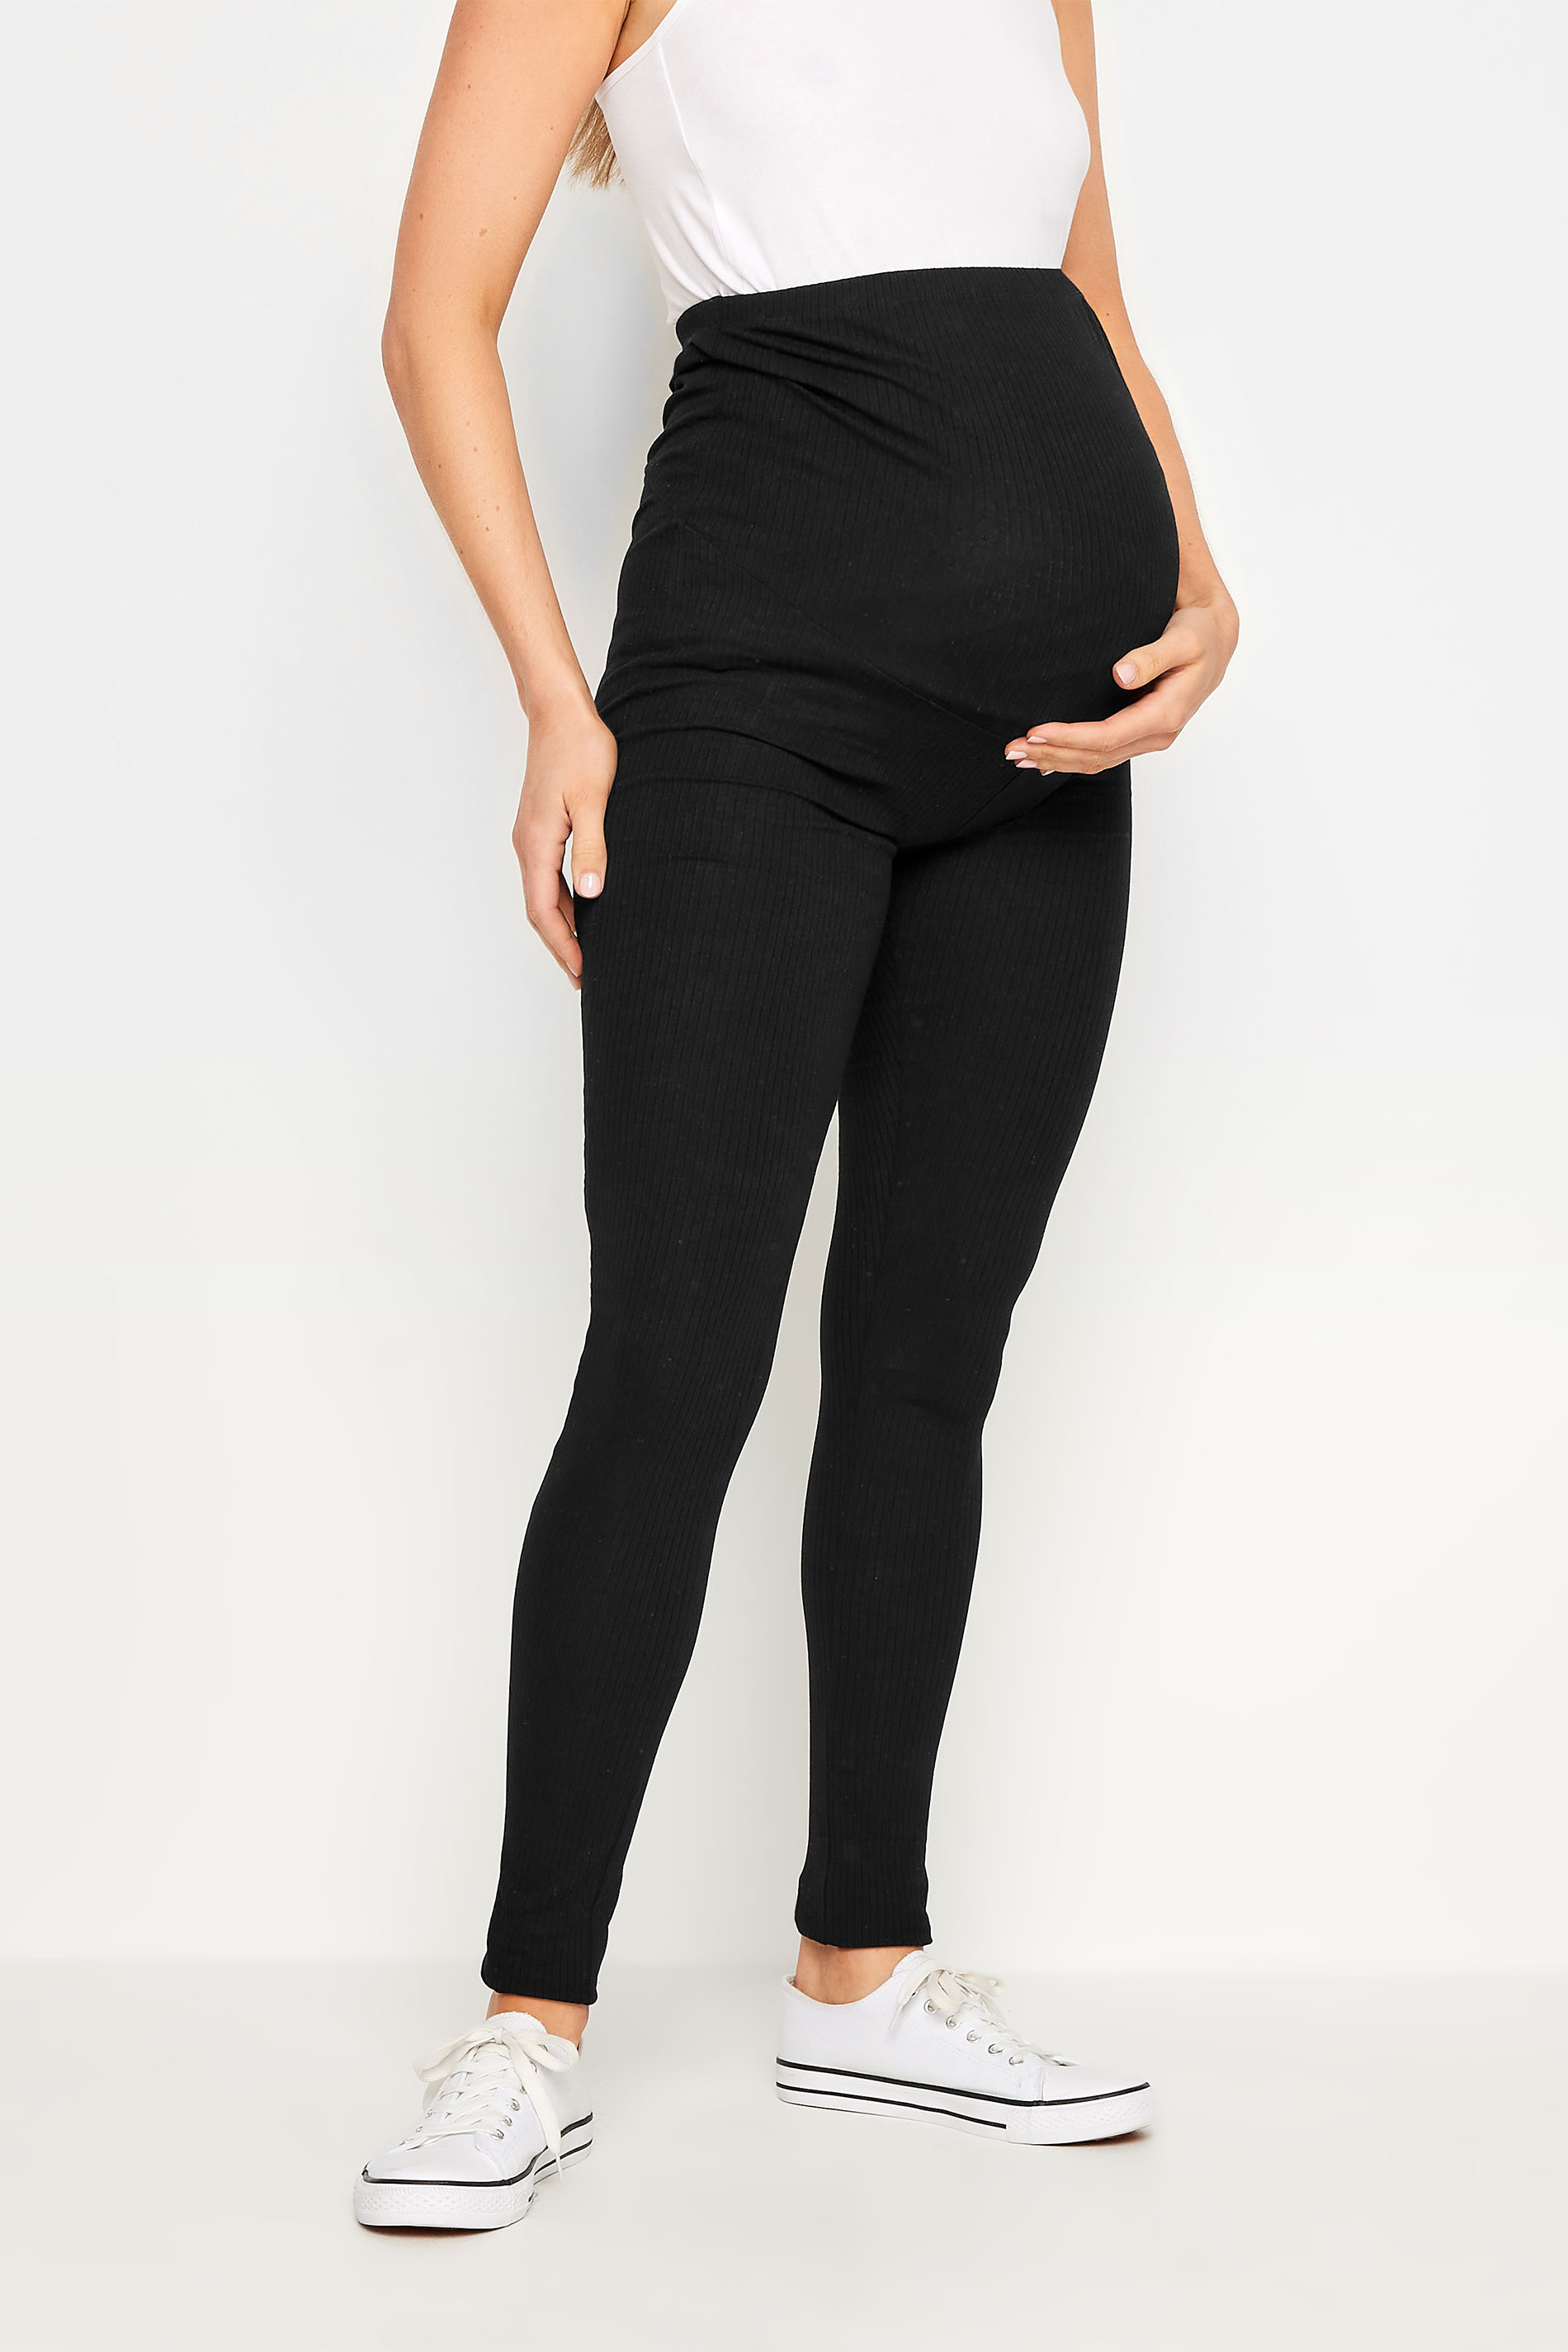 LTS Tall Women's Maternity Black Cotton Leggings | Long Tall Sally 2